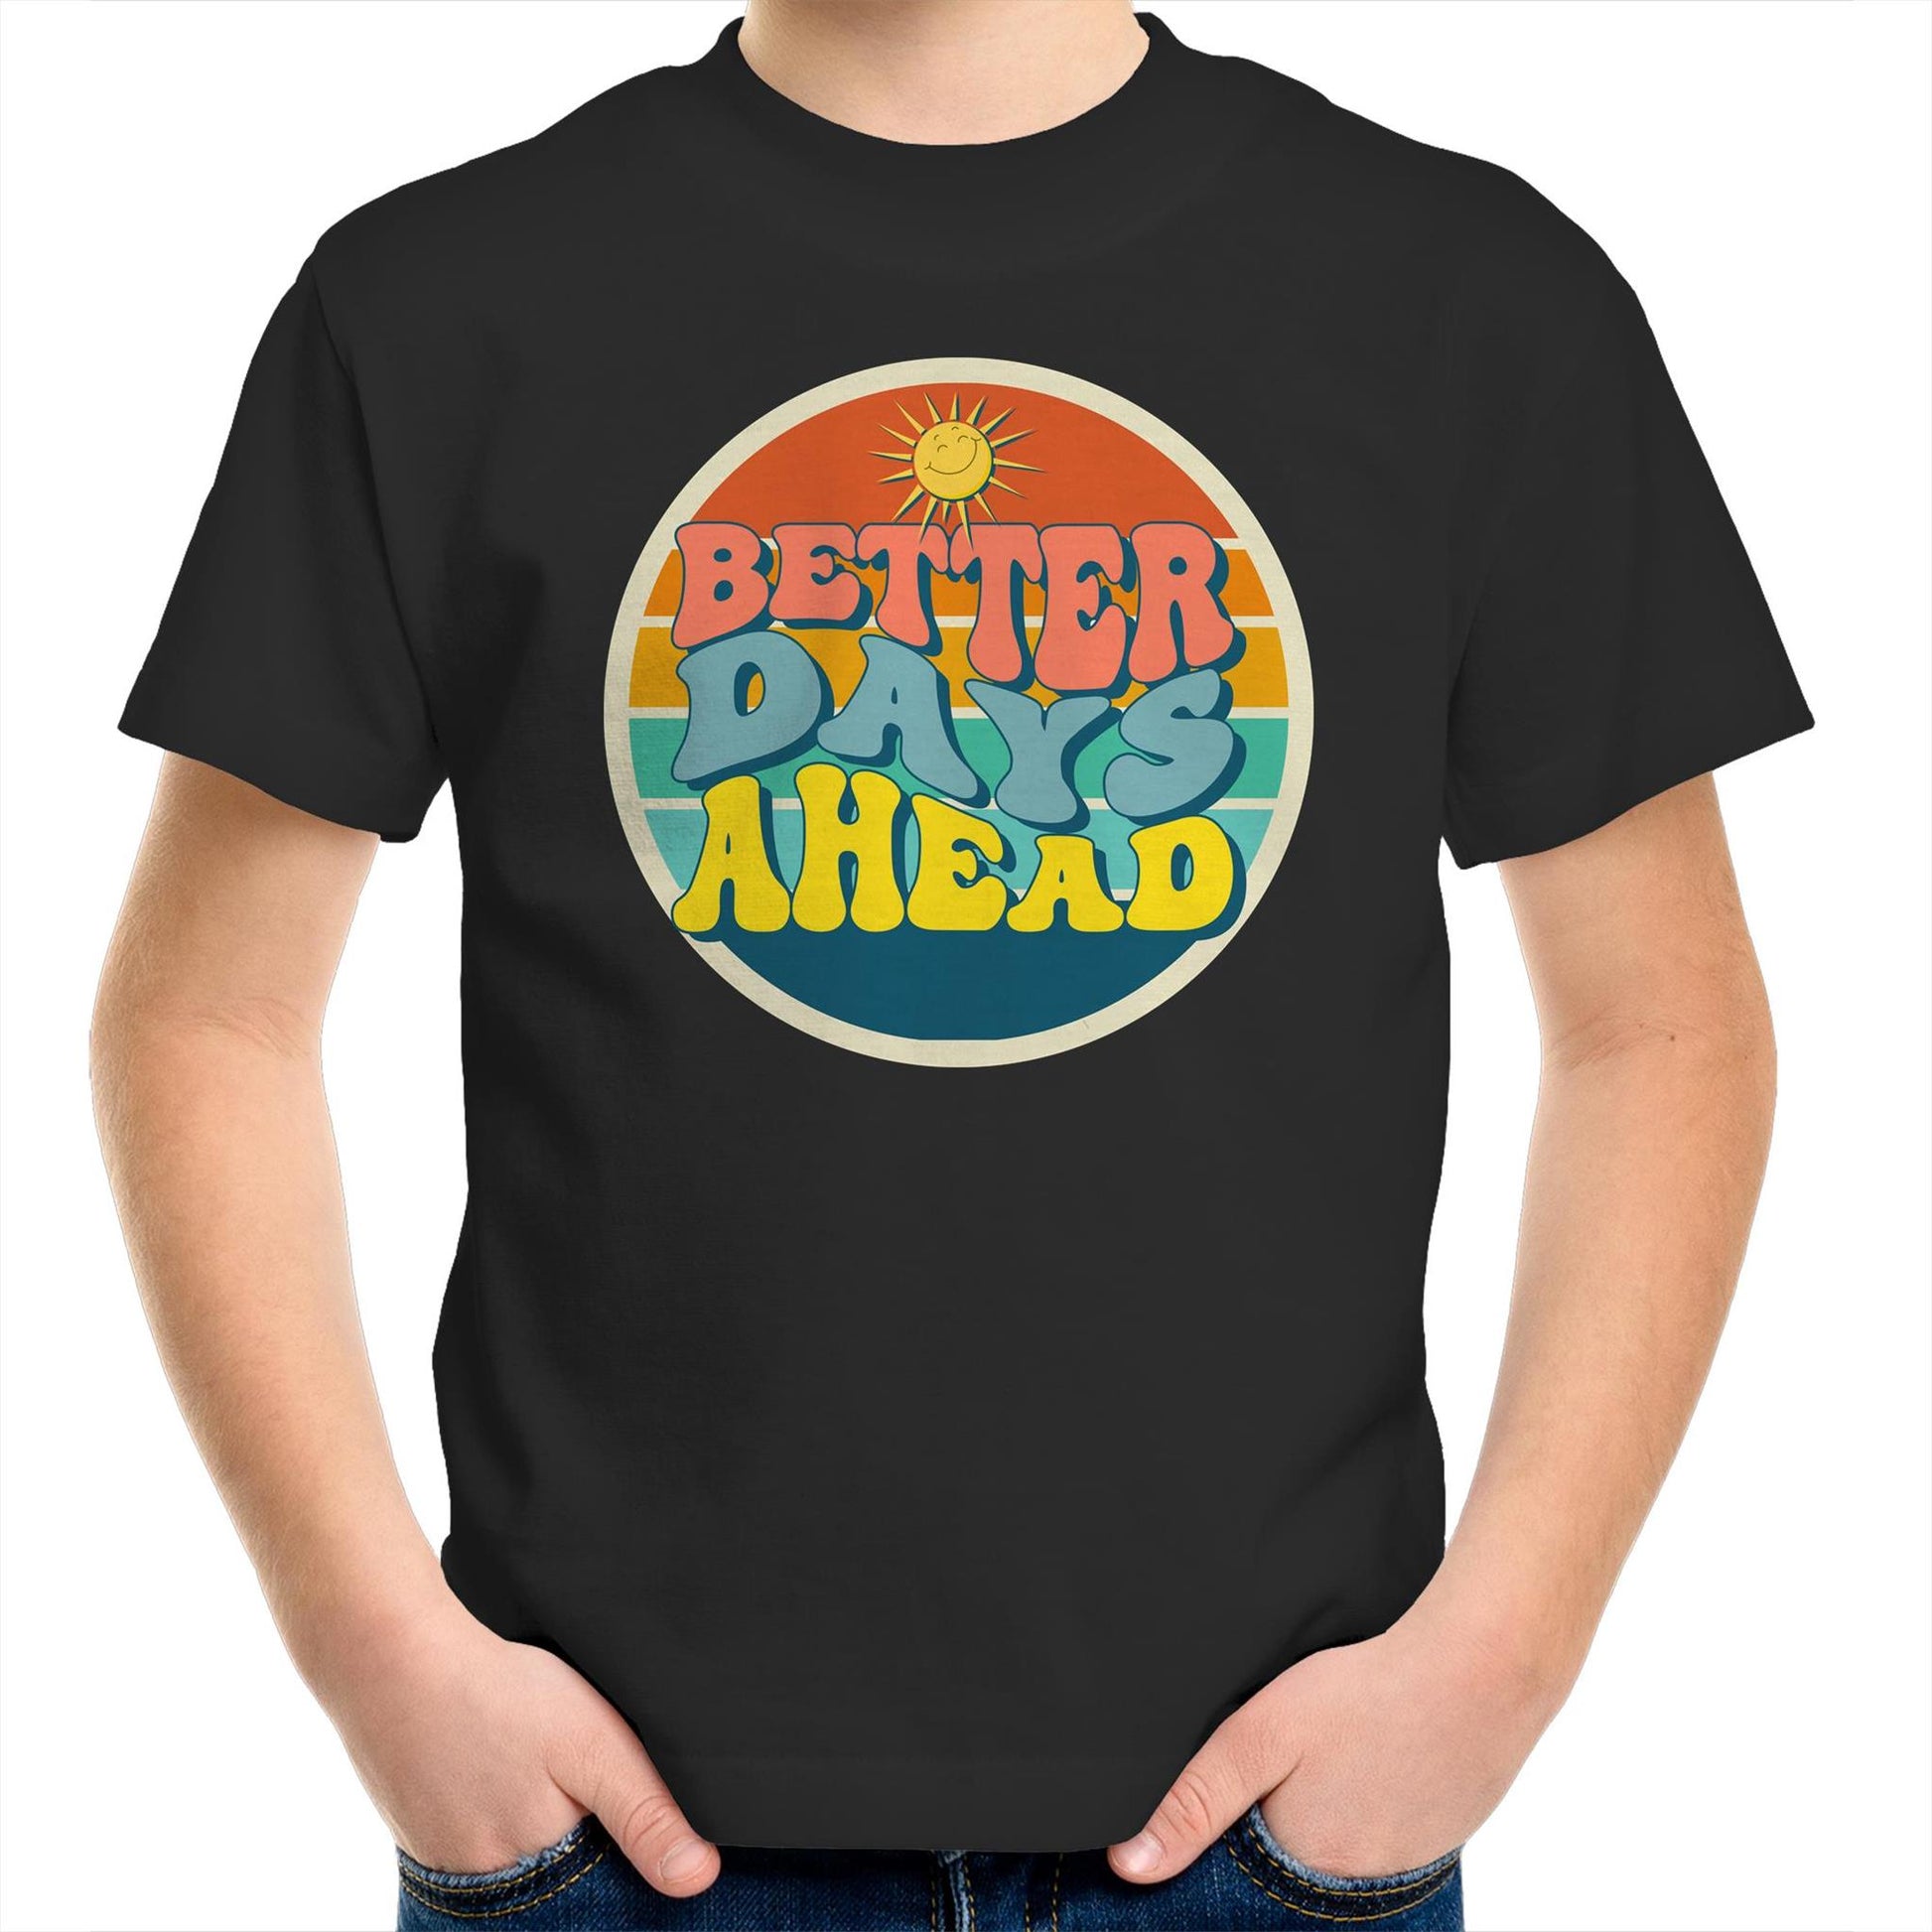 Better Days Ahead - Kids Youth T-Shirt Black Kids Youth T-shirt Motivation Retro